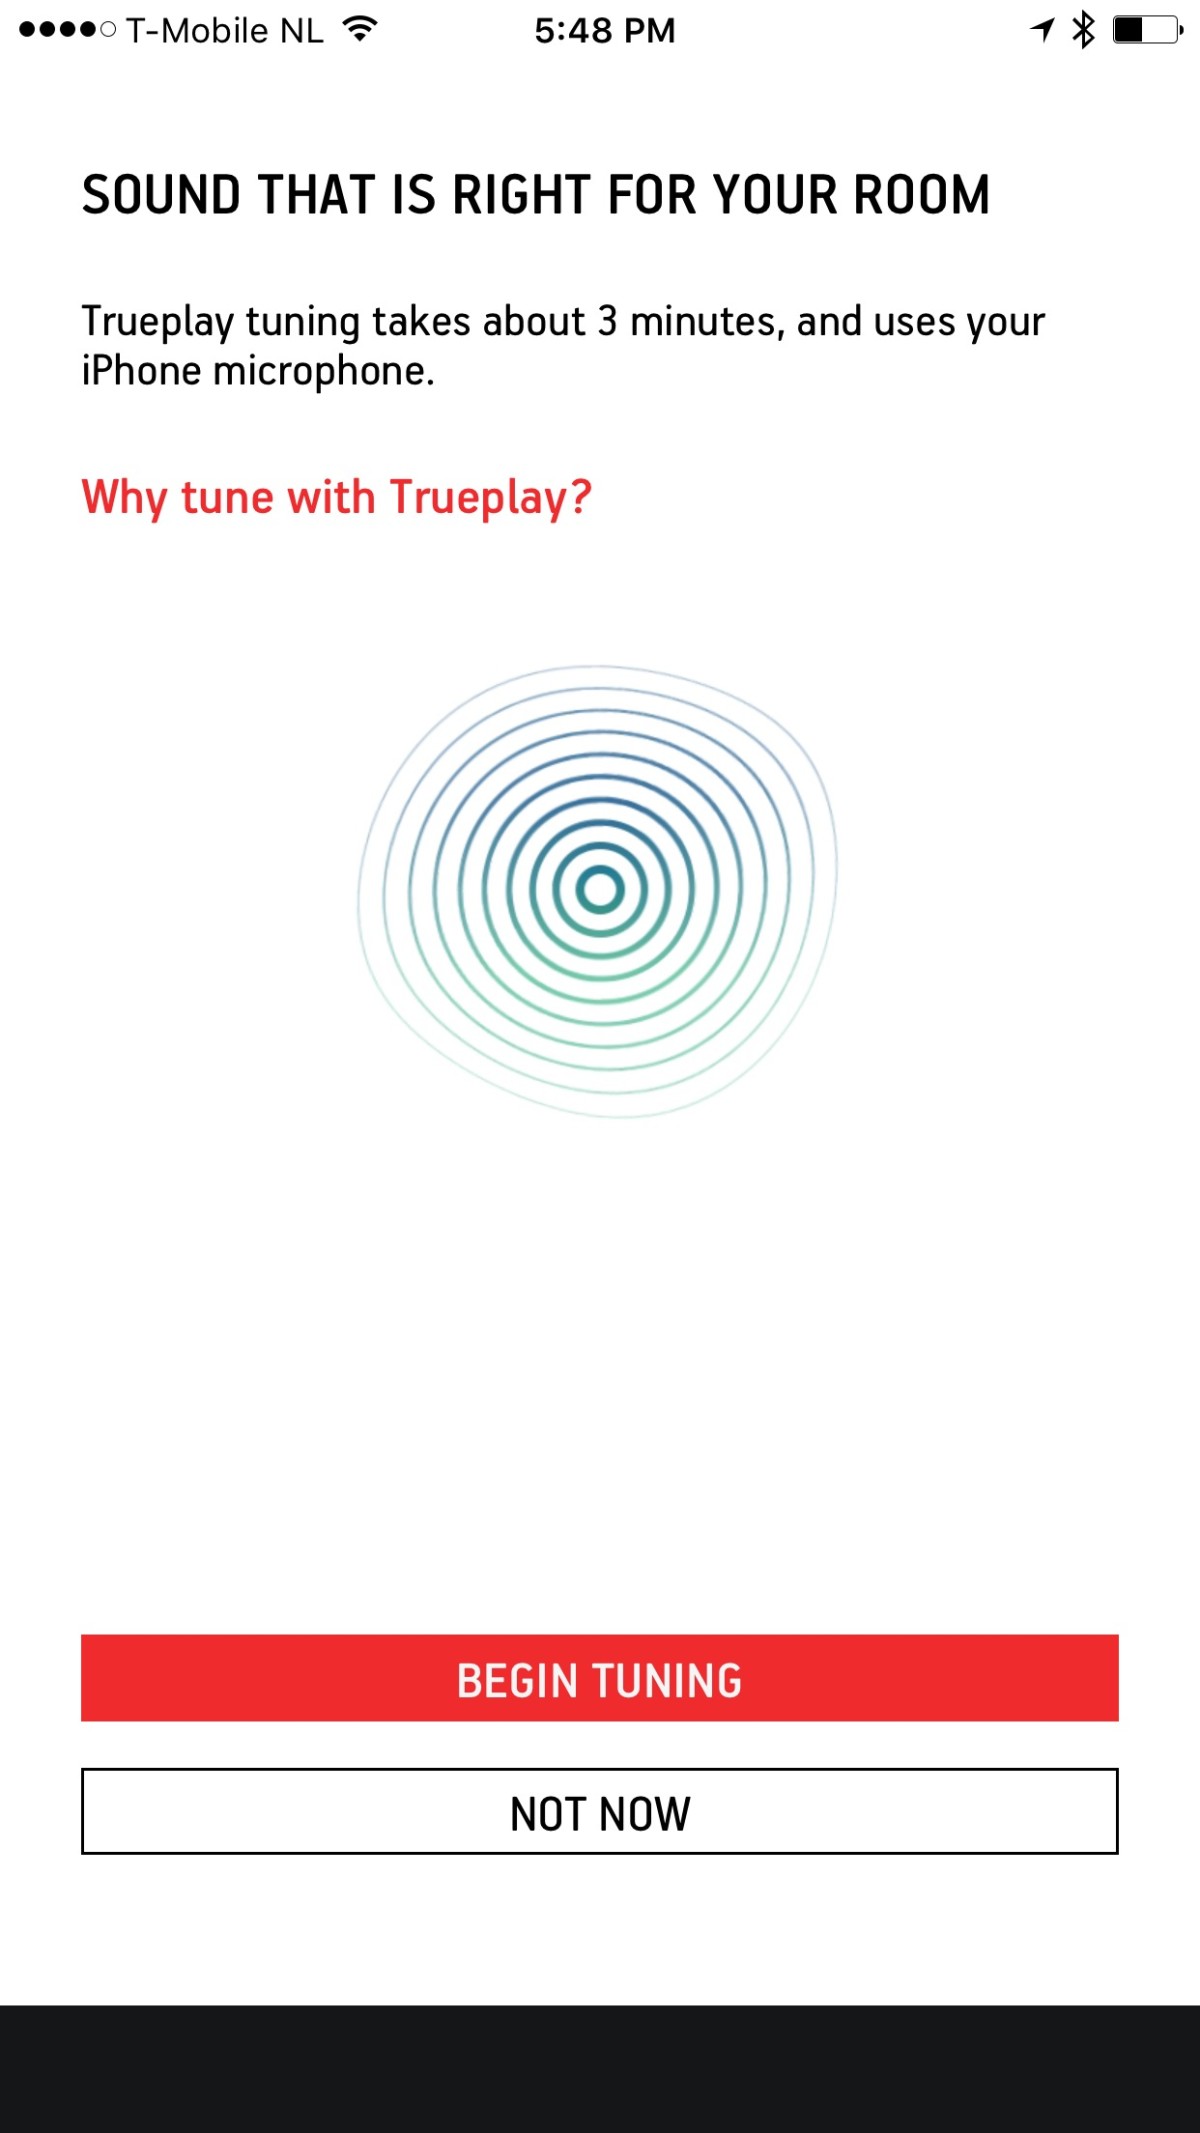 Sonos TruePlay functionality